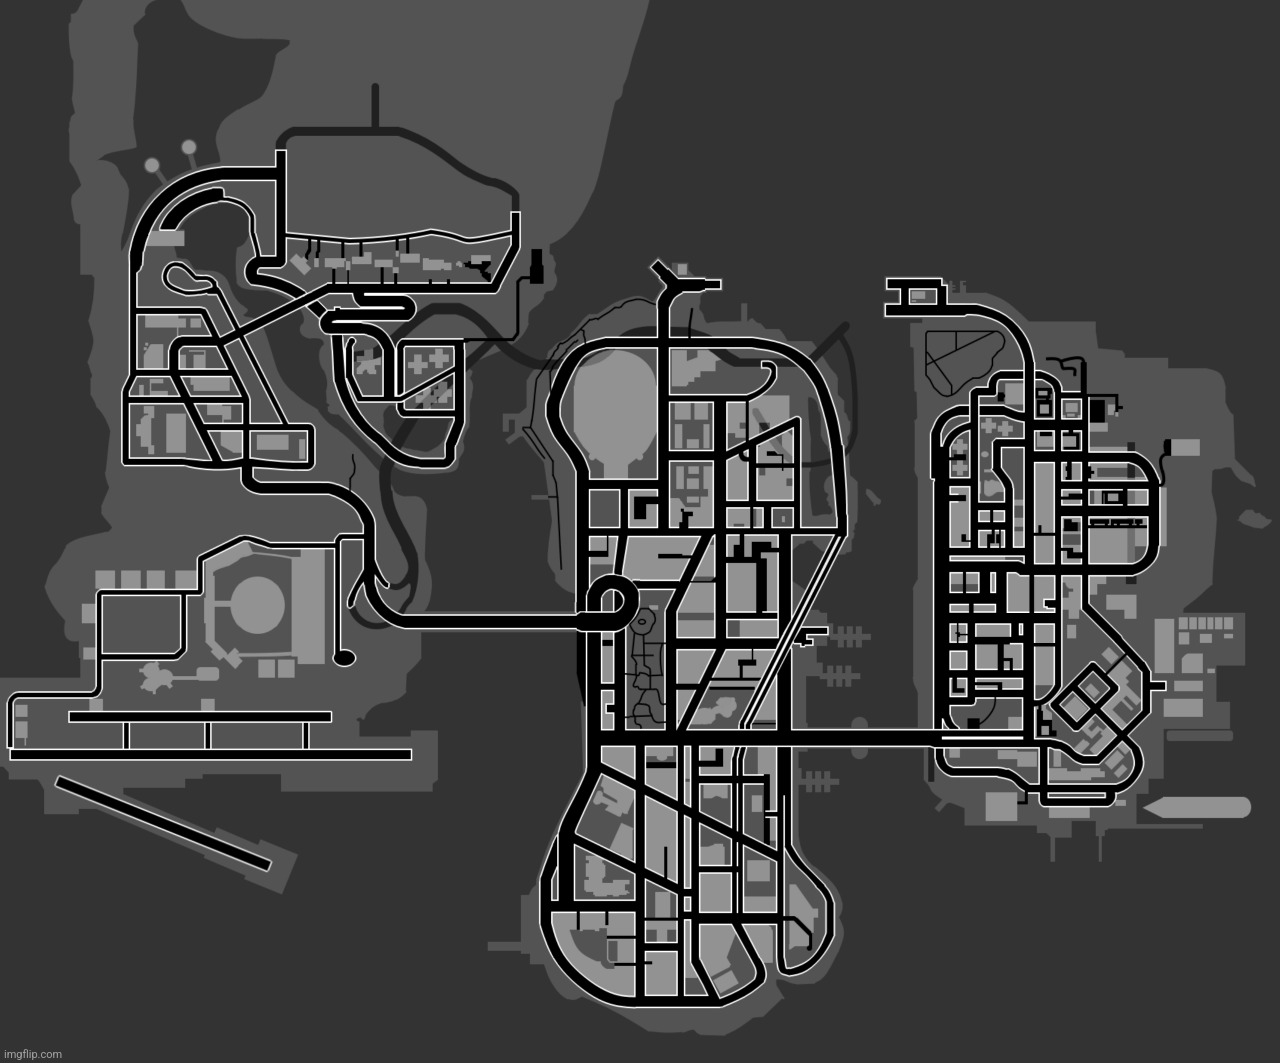 GTA 3 map | image tagged in gta,gta 3,claude,map,iunfunny gaming,iunfunny | made w/ Imgflip meme maker